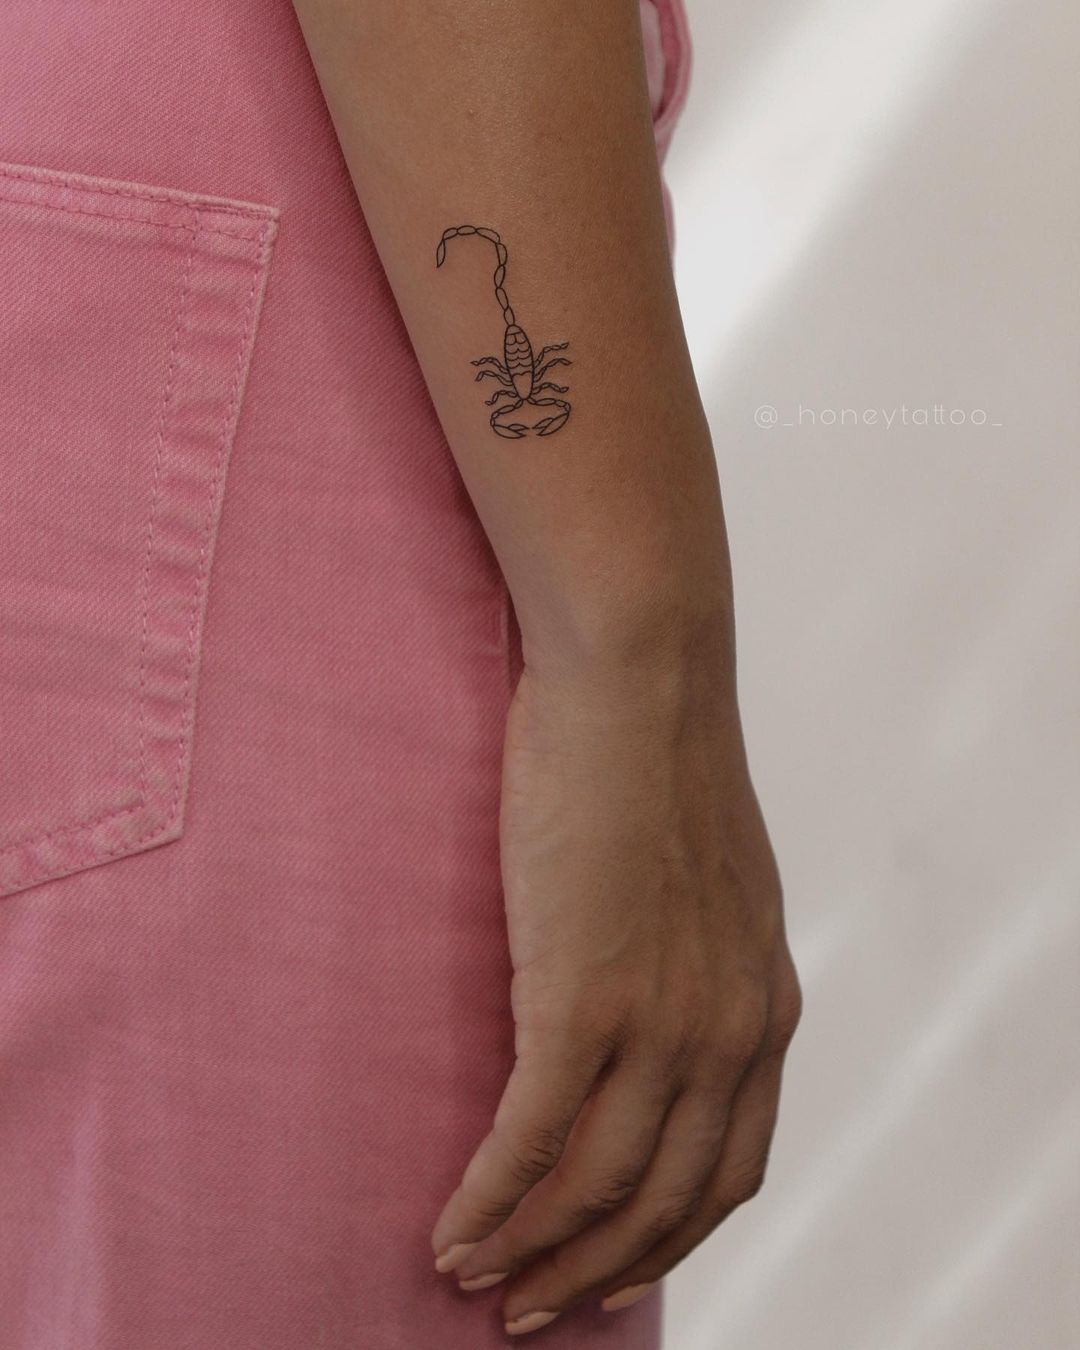 Scorpio tattoo design by honeytattoo